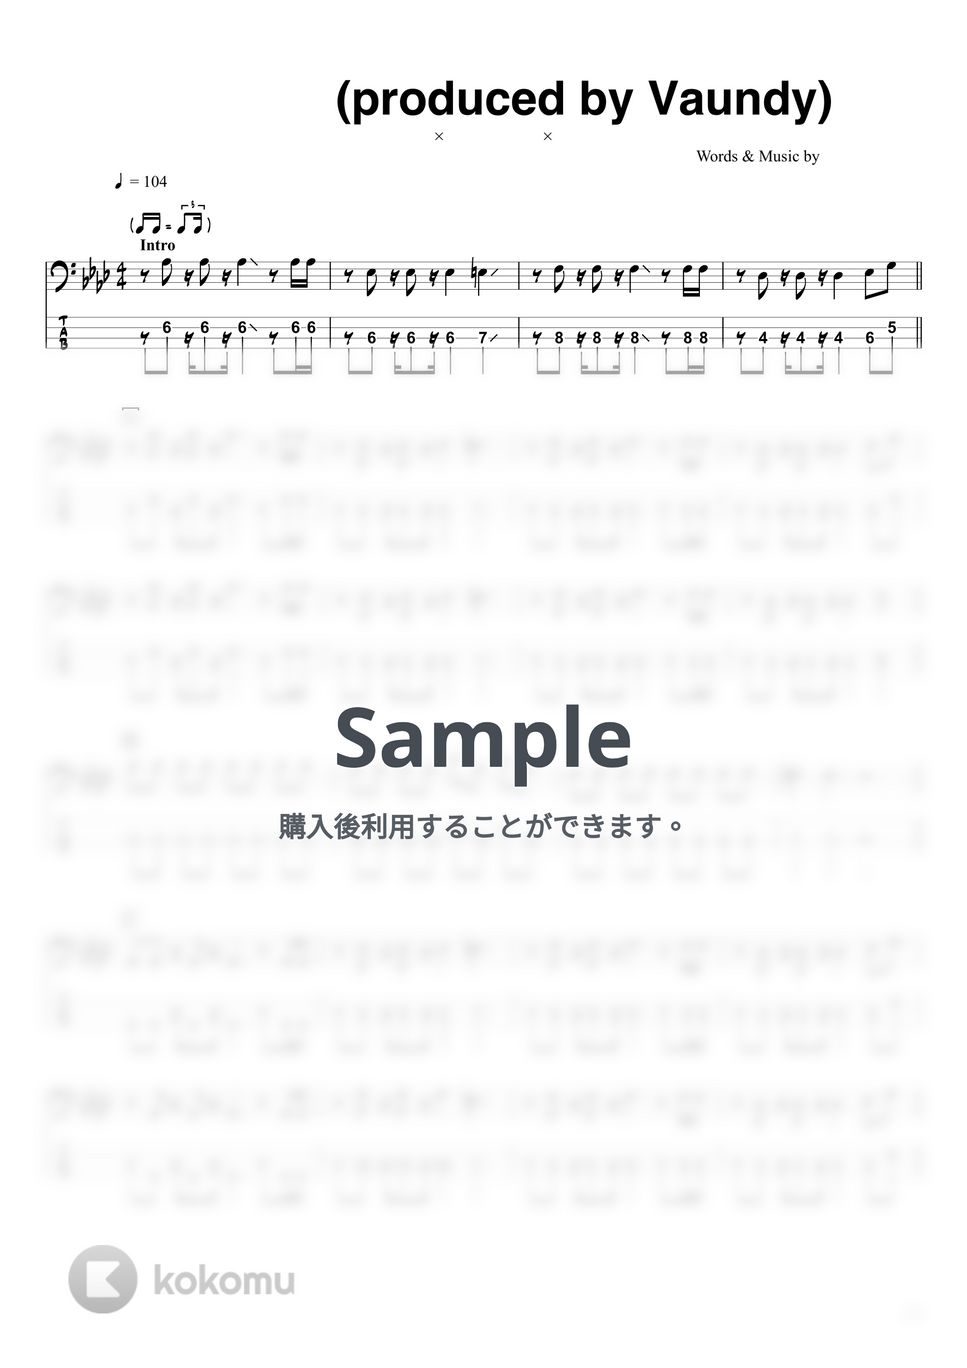 milet×Aimer×幾田りら - おもかげ (produced by Vaundy) (ベースTAB譜☆4弦ベース対応) by swbass